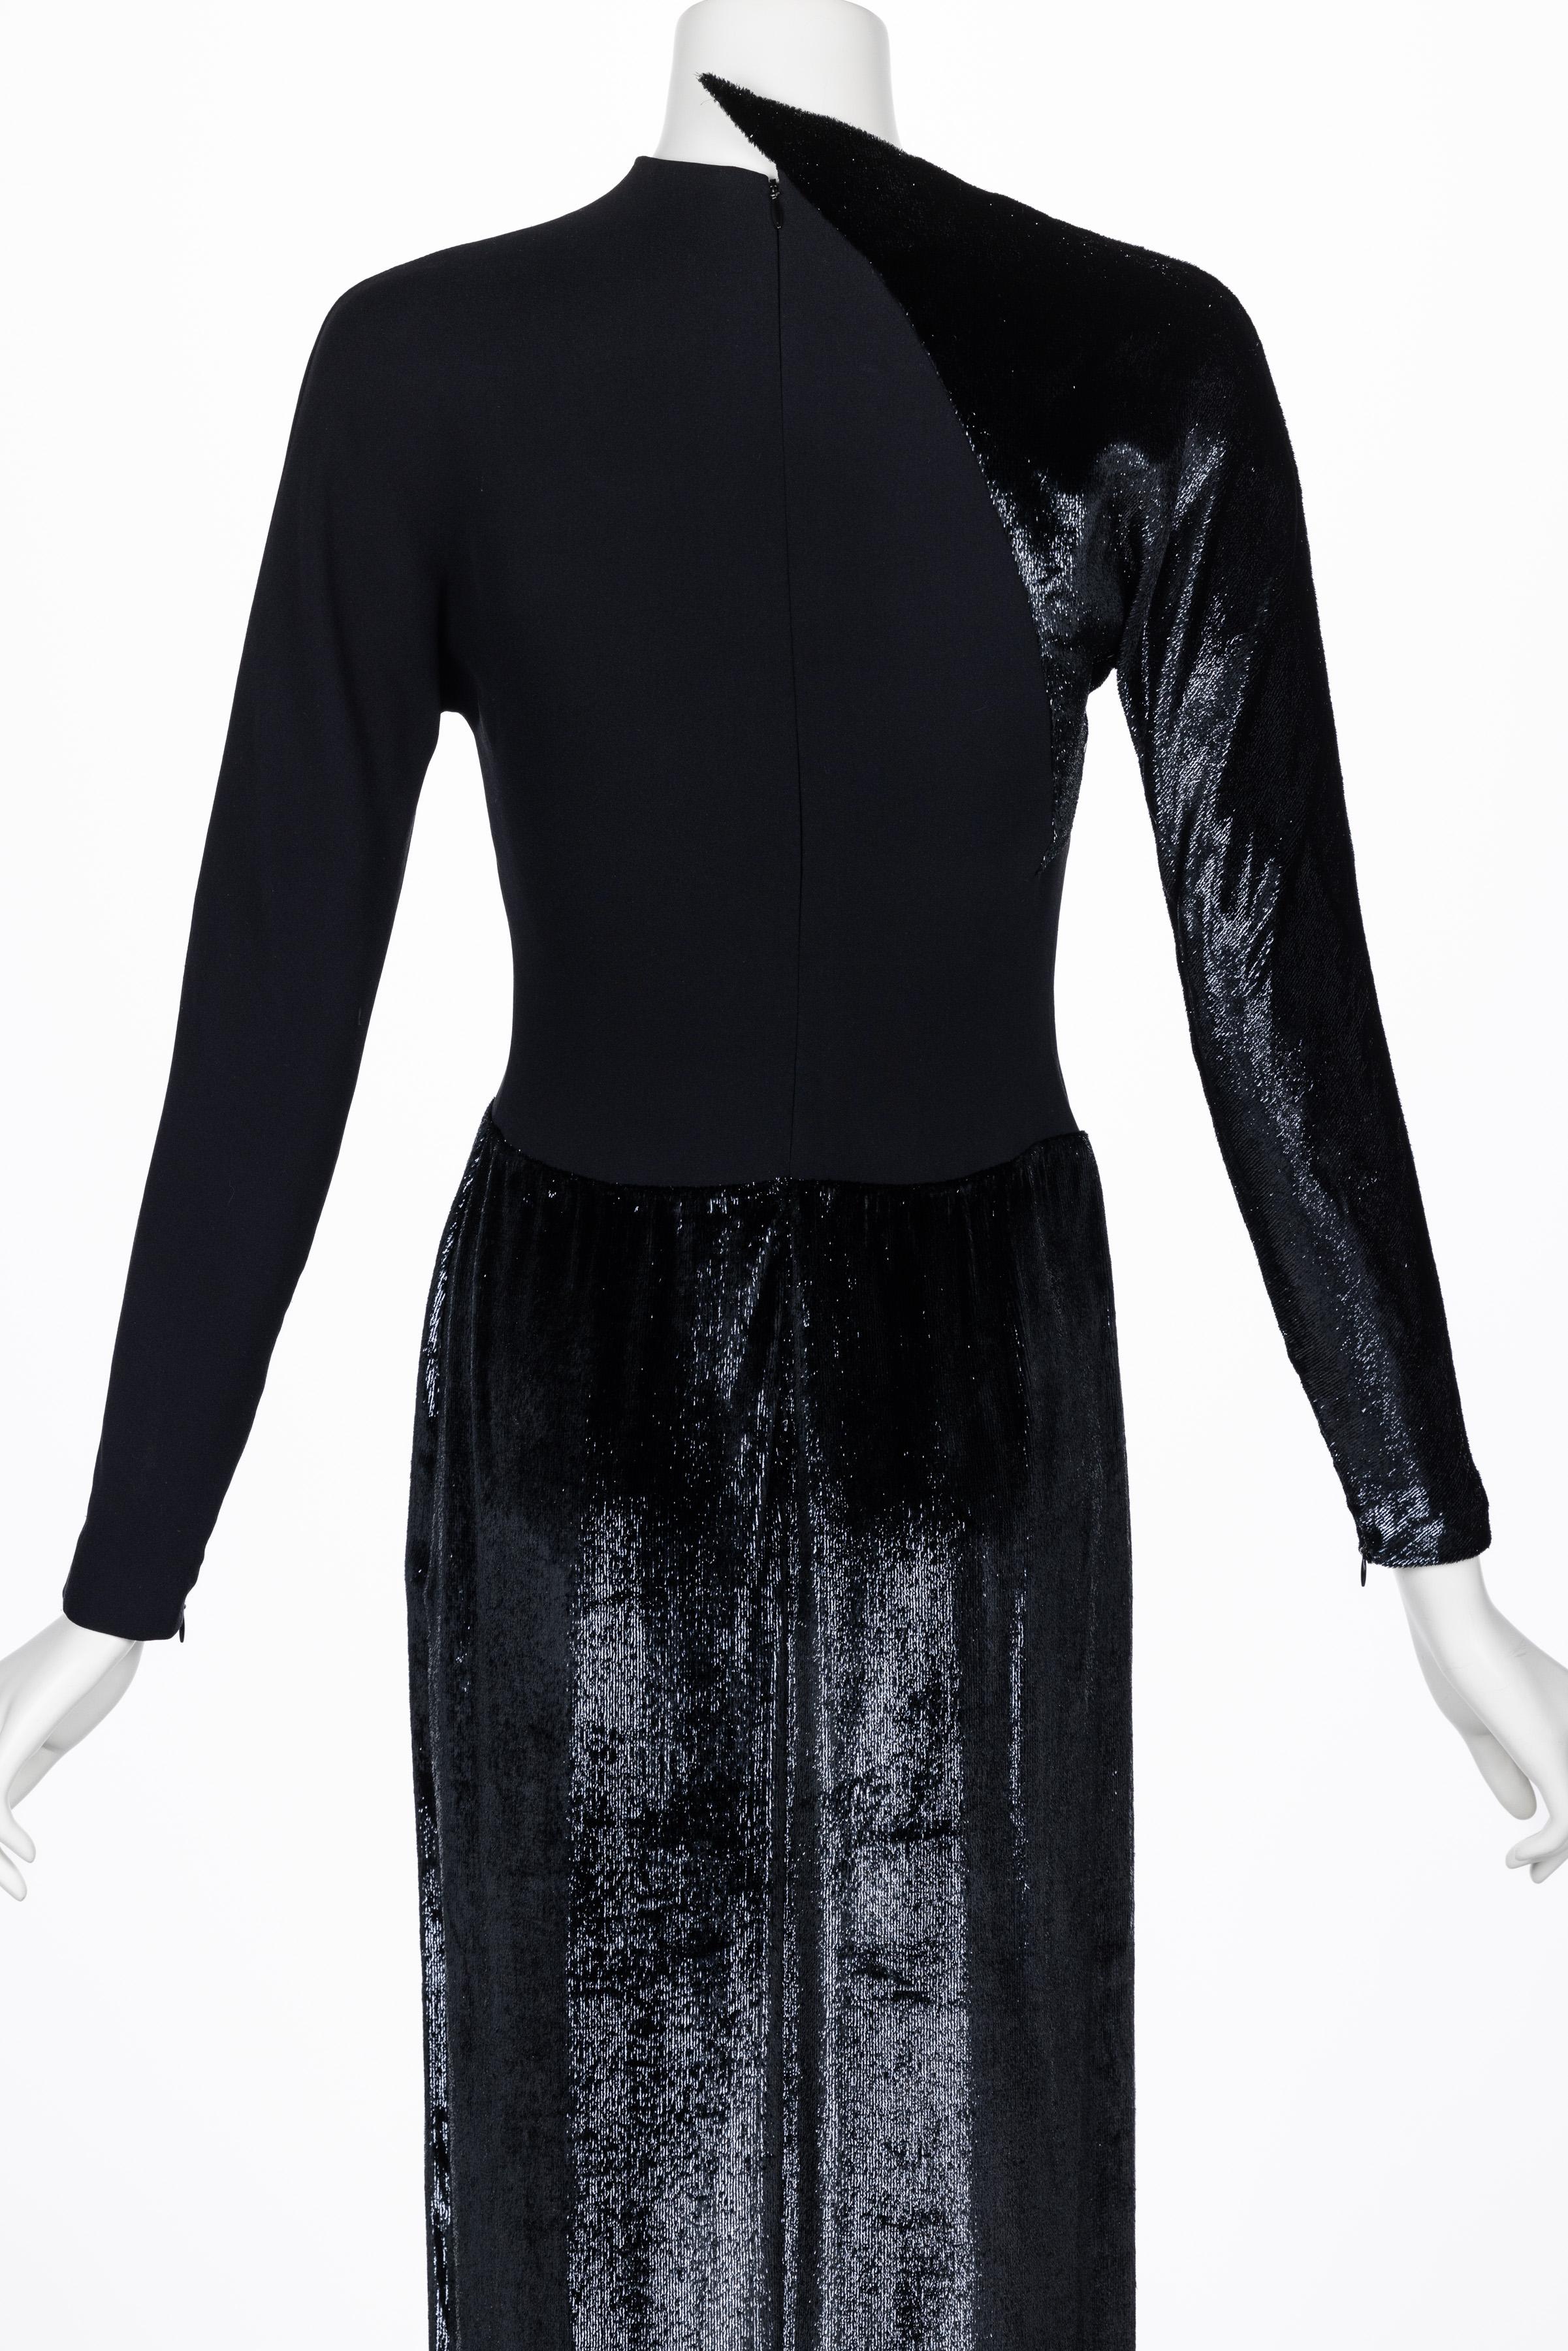 Geoffrey Beene Black Crepe Panne Velvet Dress 1990s For Sale 5